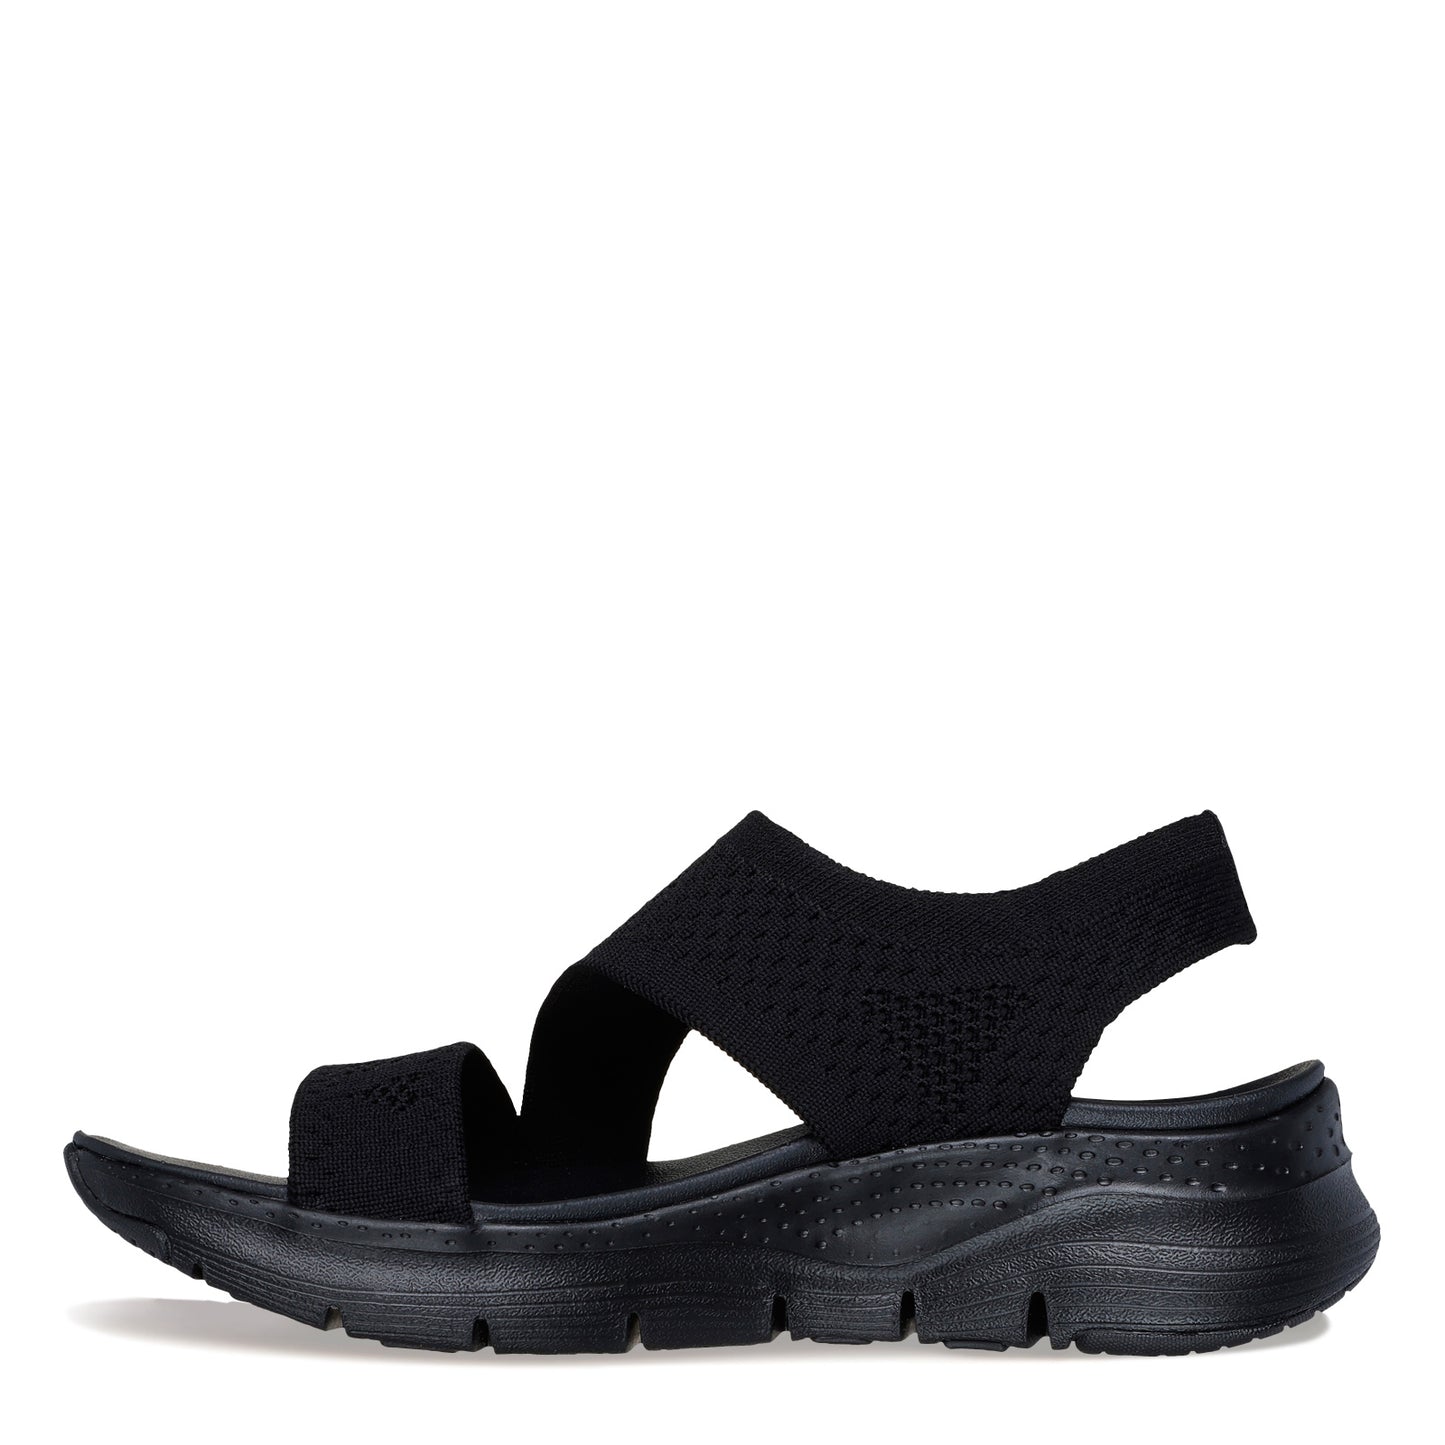 Peltz Shoes  Women's Skechers Arch Fit - Brightest Day Sandal Solid Black 119458-BBK